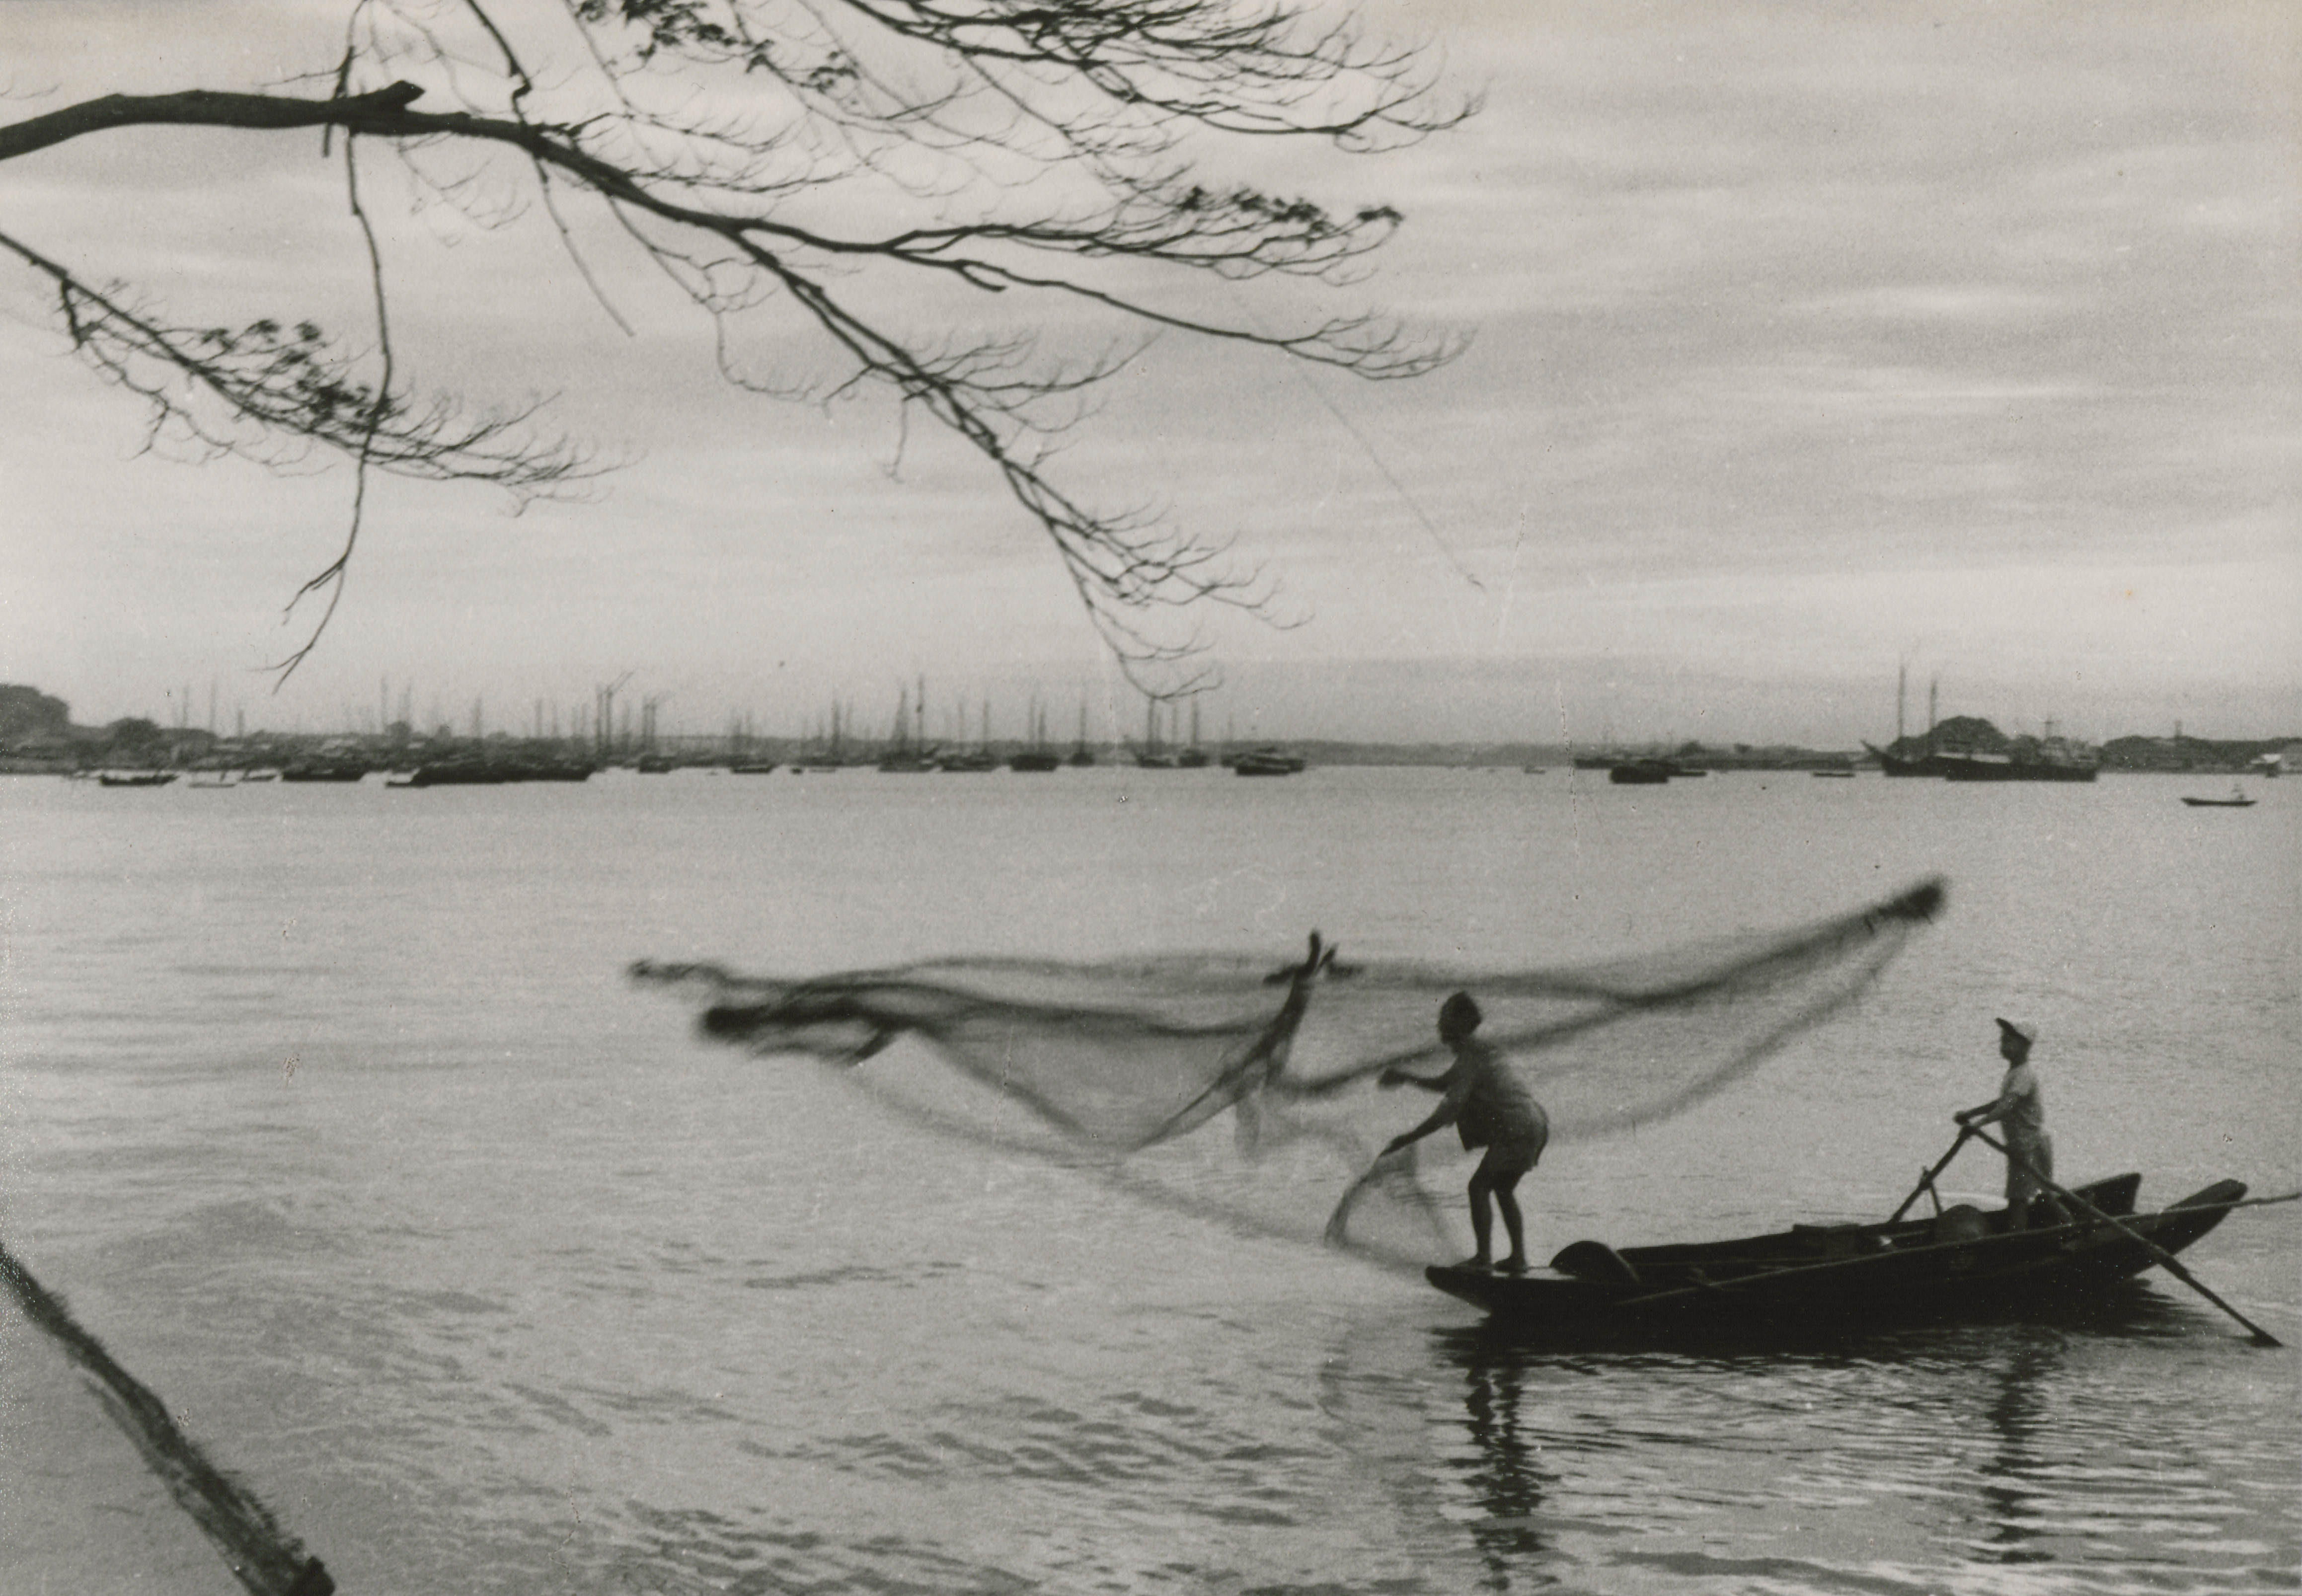 Jurong early fishing photograph